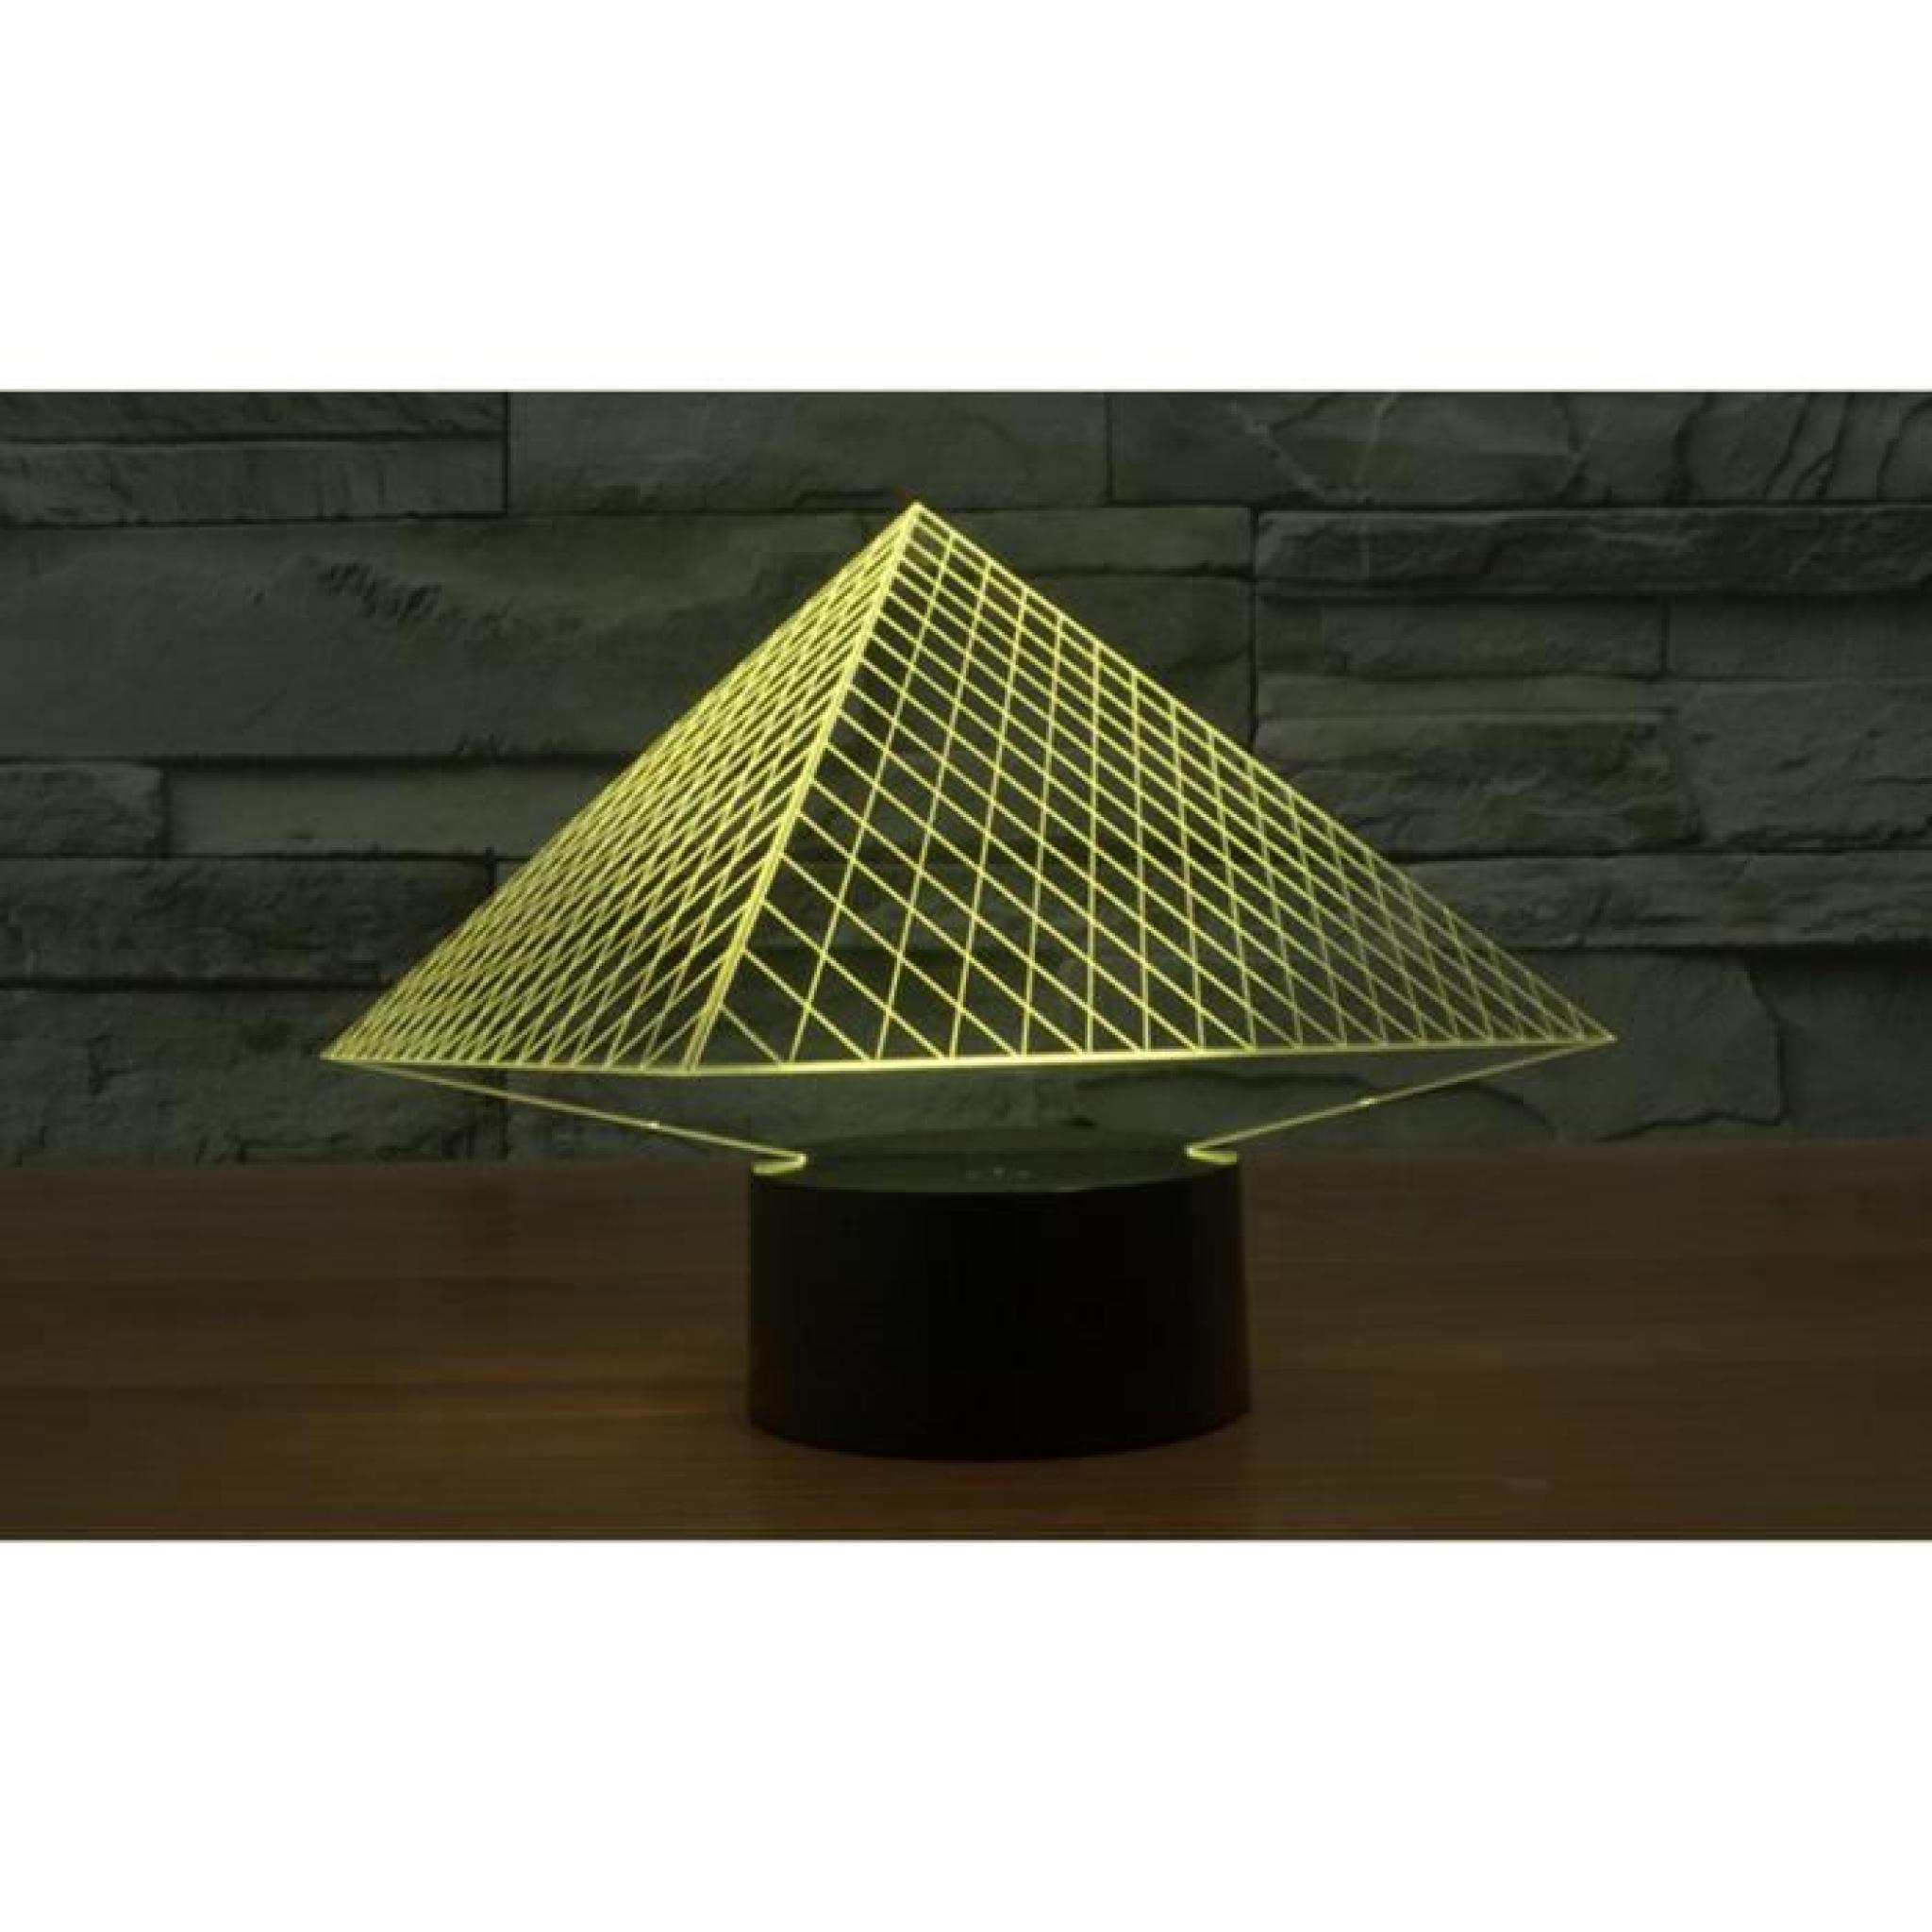 Lampe Creative pyramide 3D